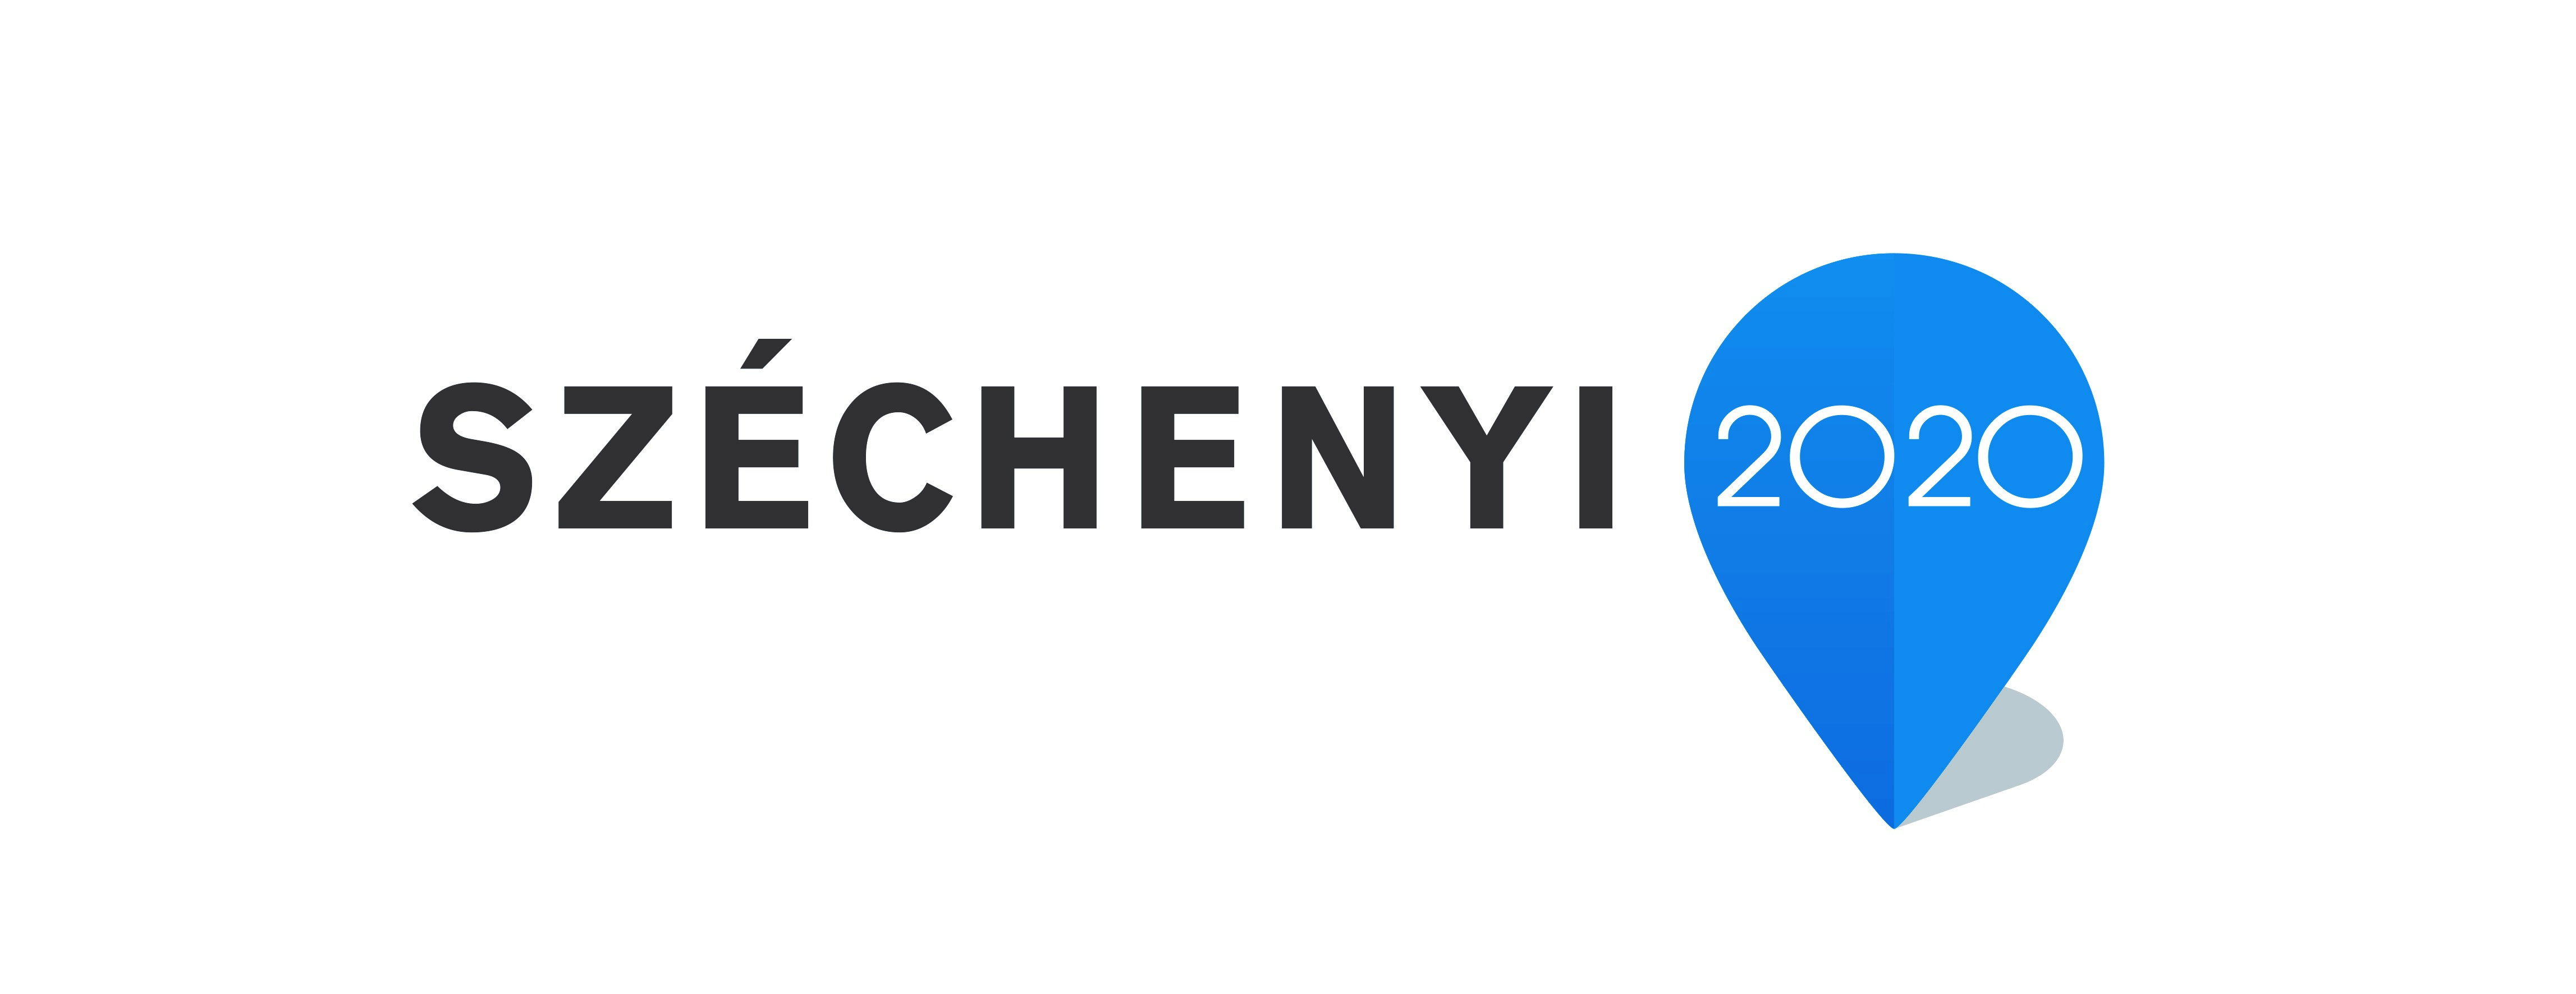 Szechenyi2020_logo.jpg